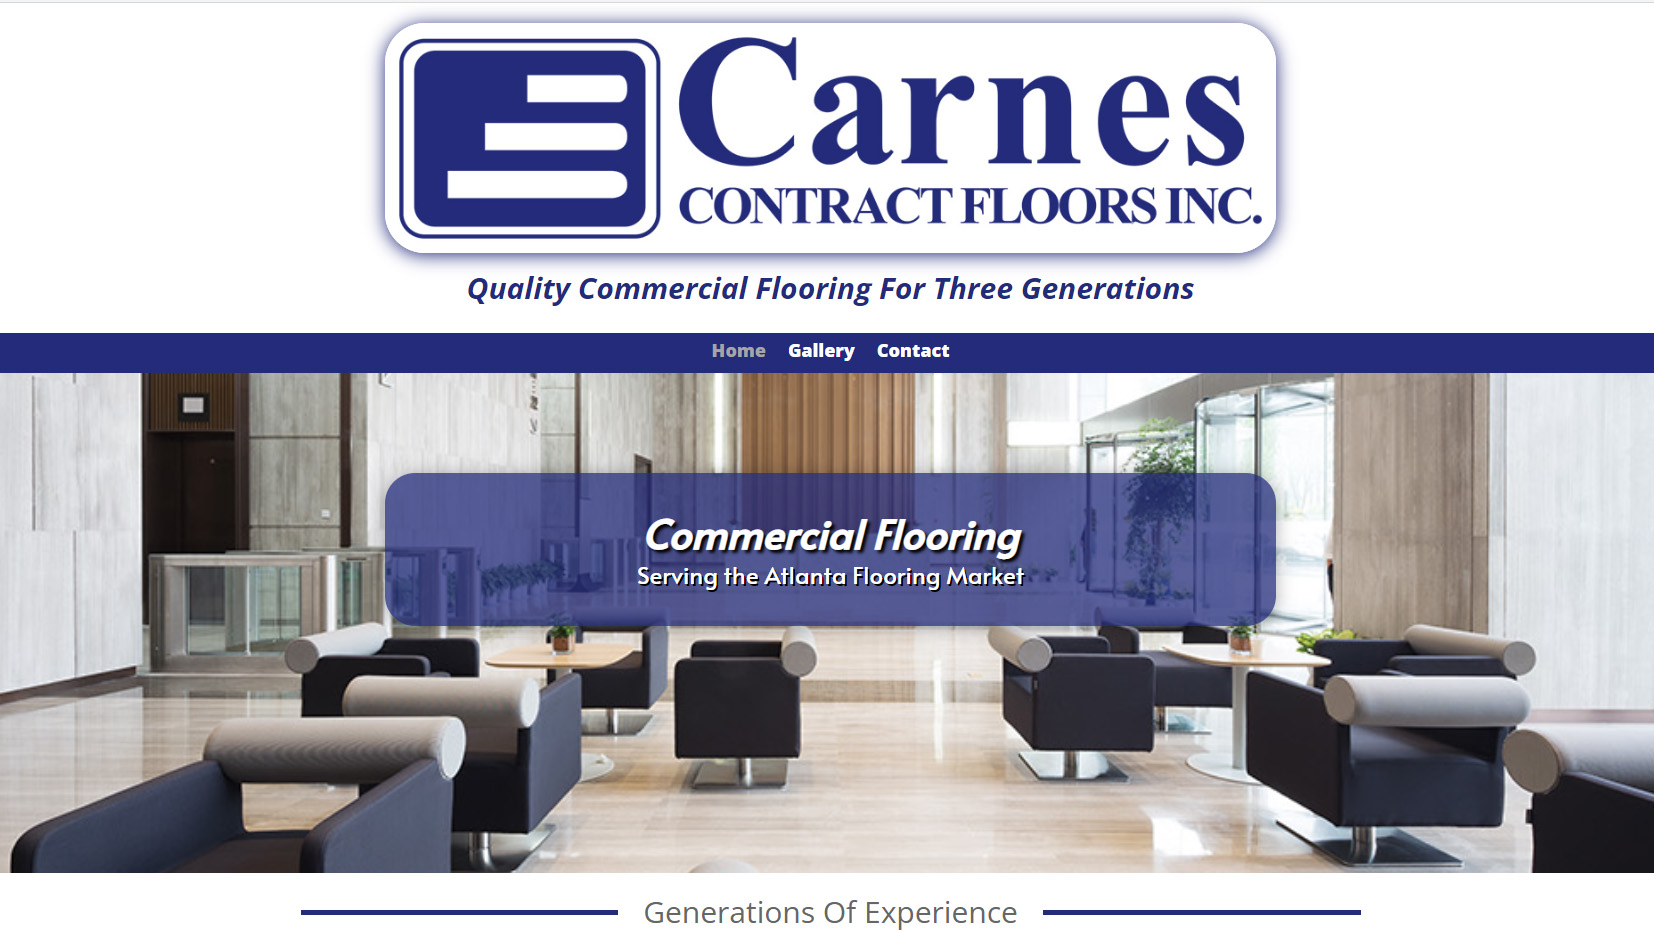 Carnes Contract Floors